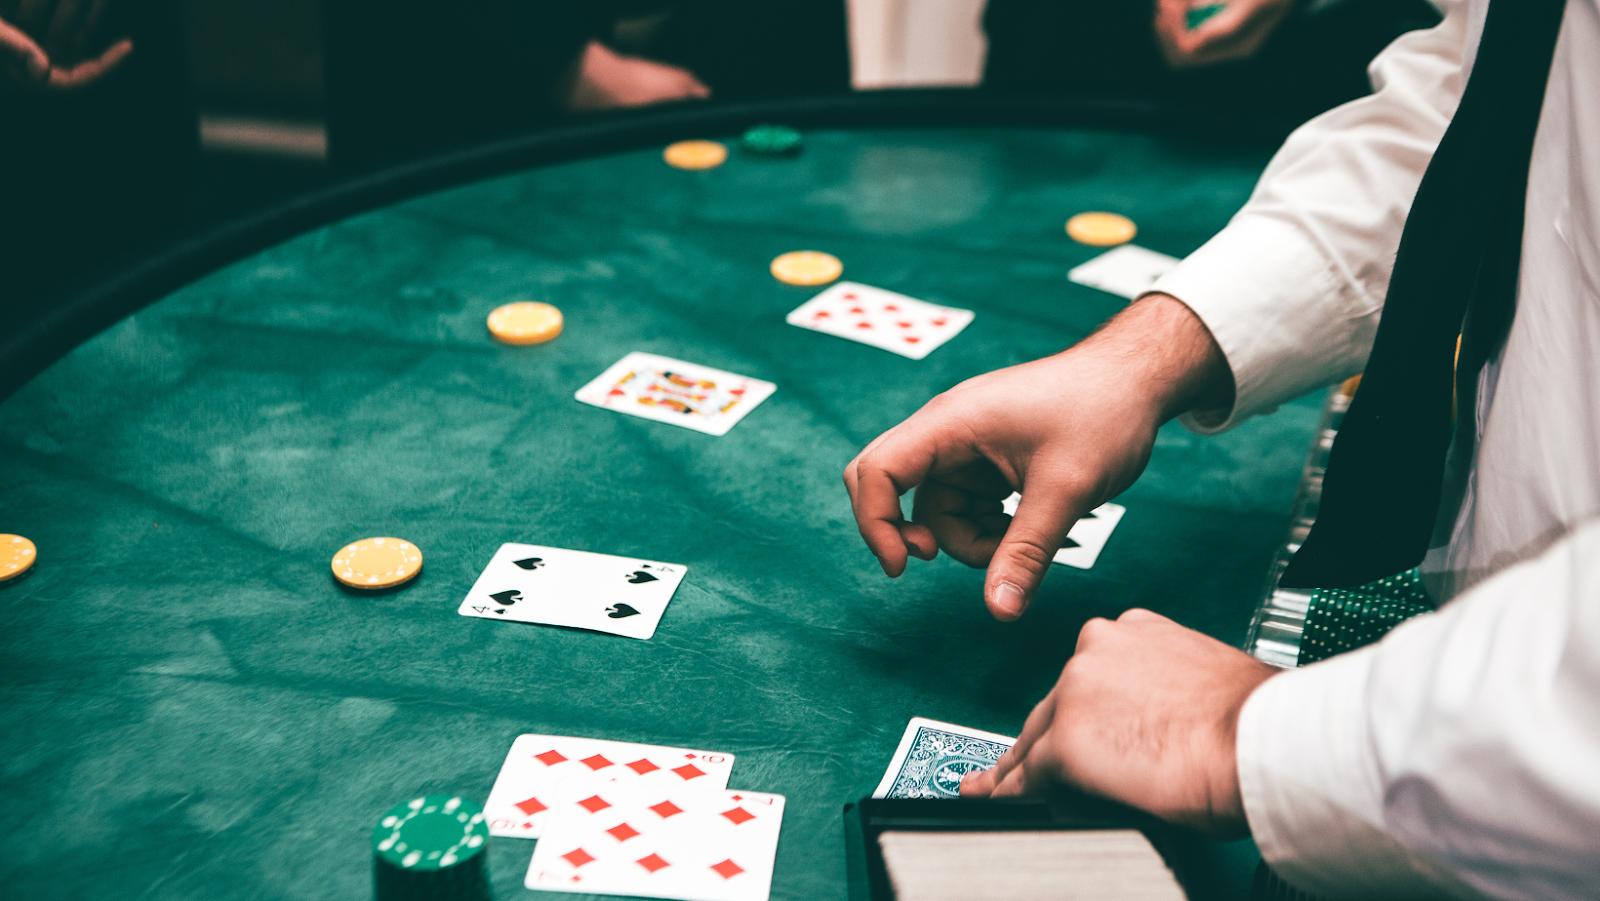 The mathematics behind poker: The basics